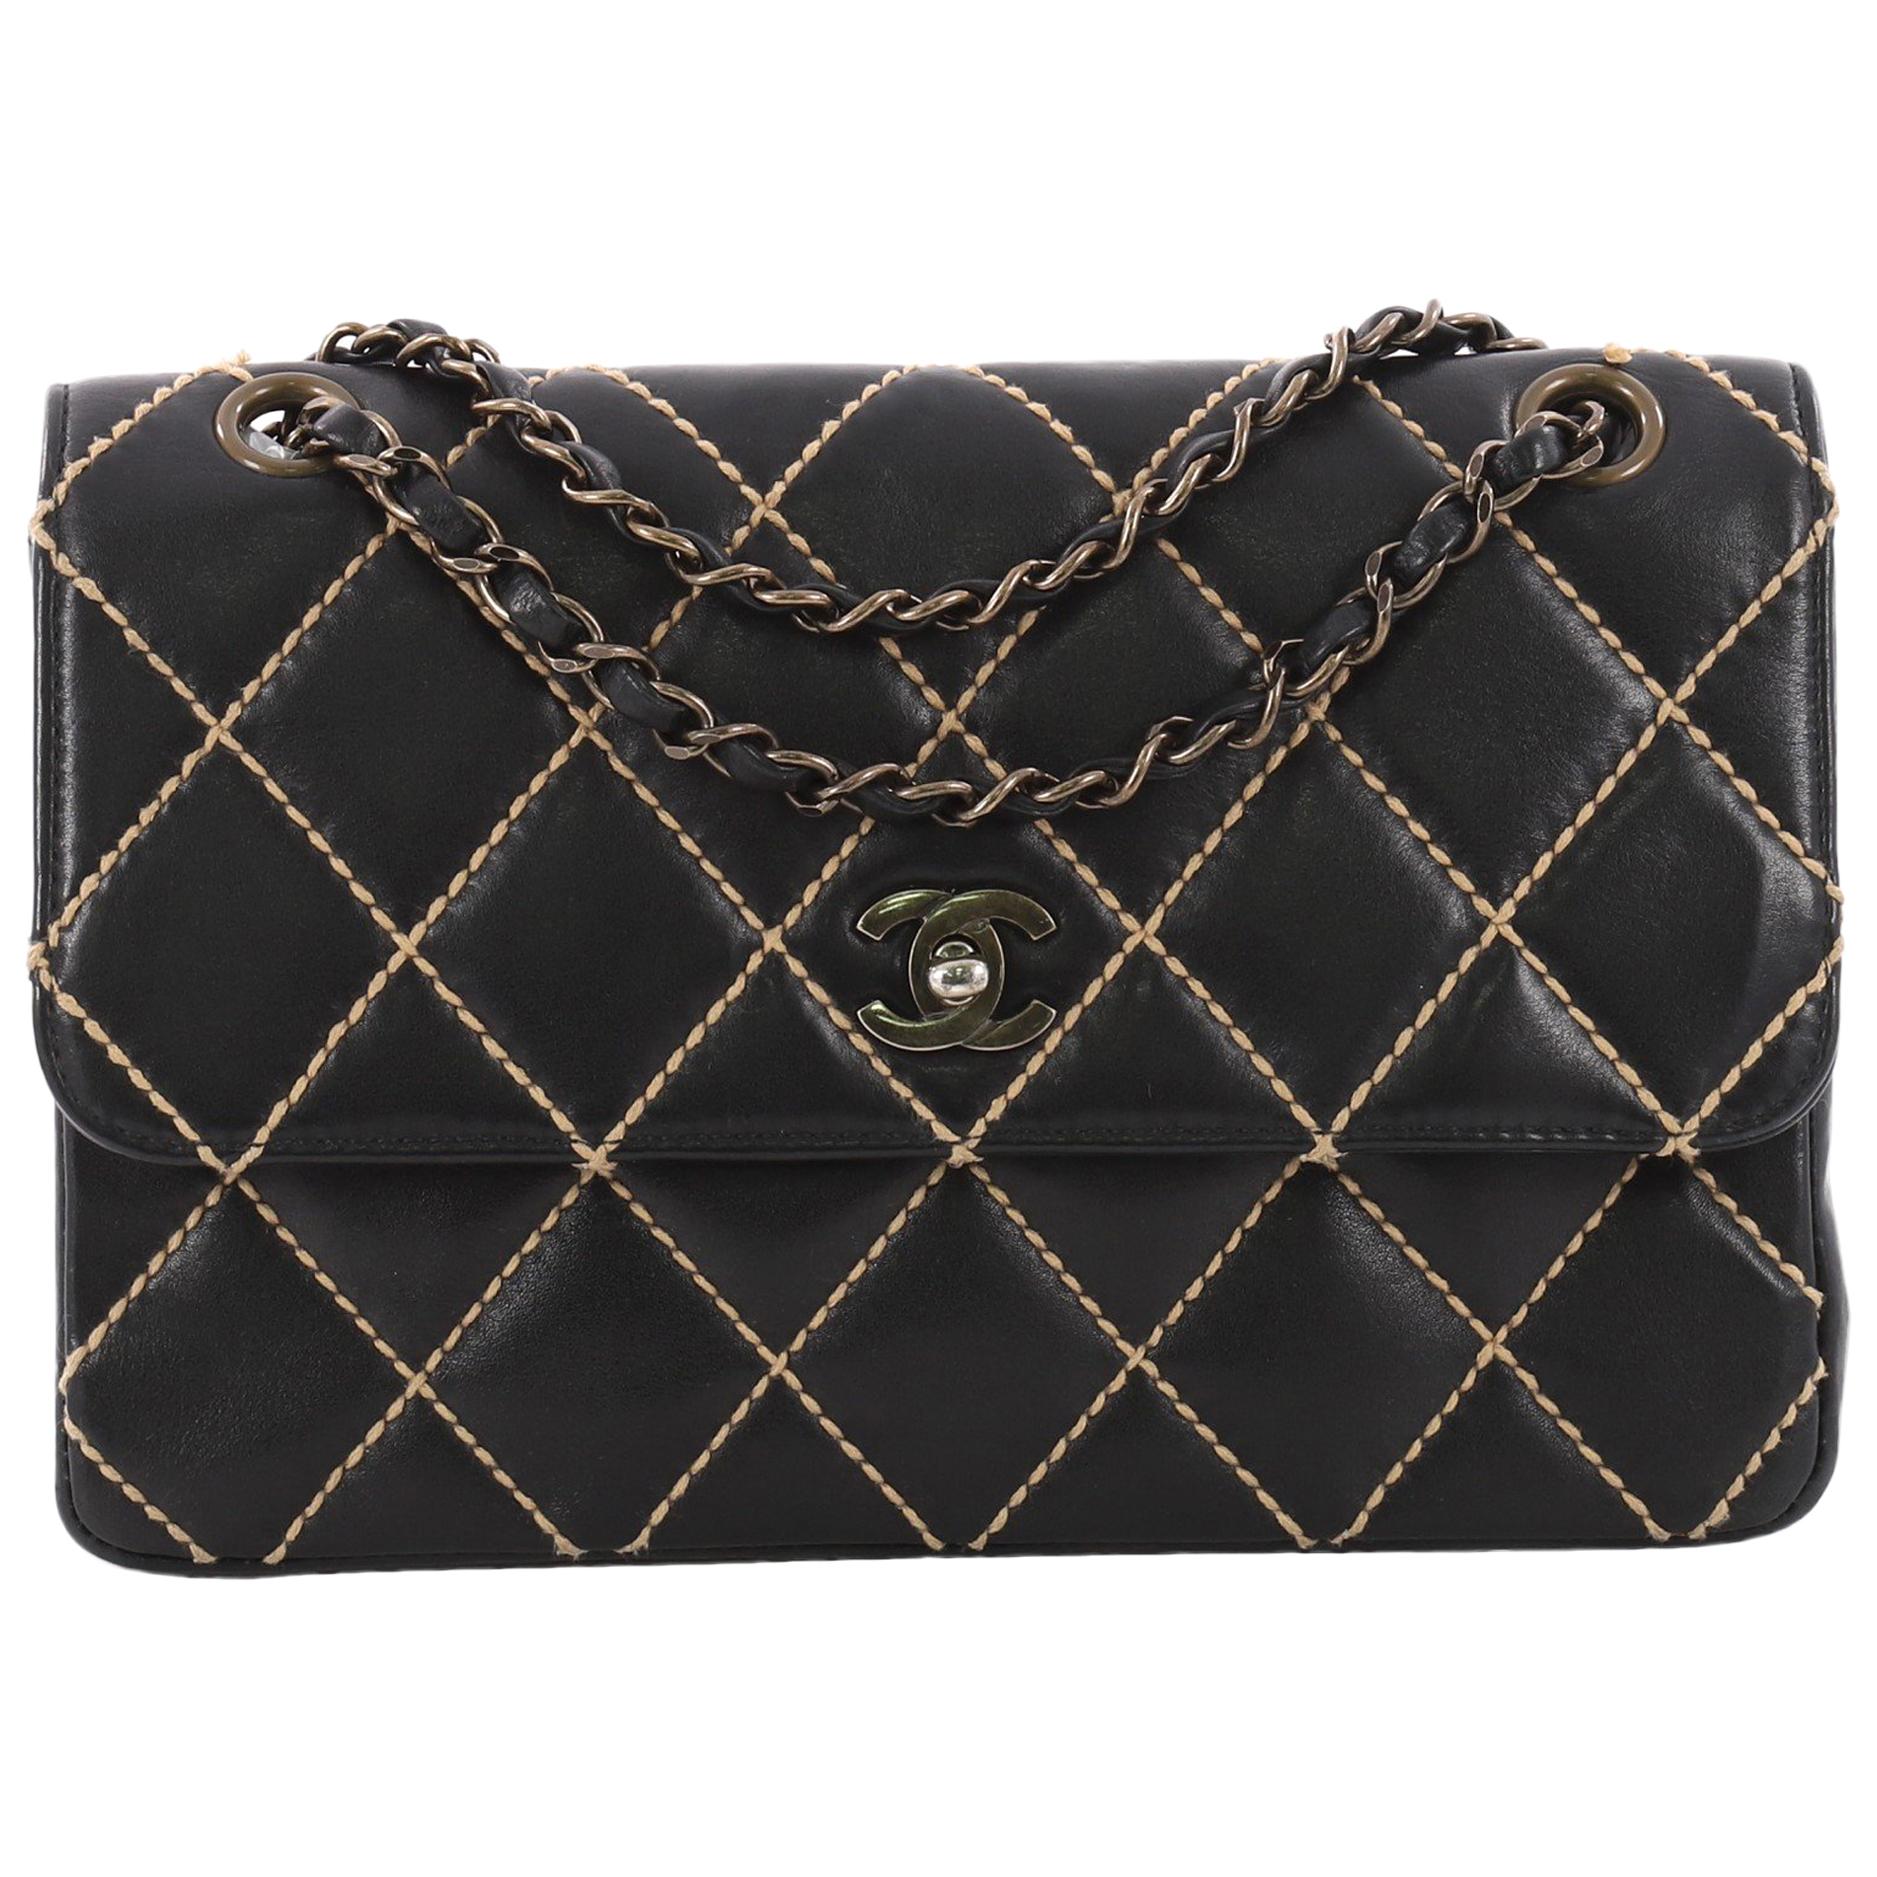 Chanel Surpique Flap Bag Quilted Leather Medium